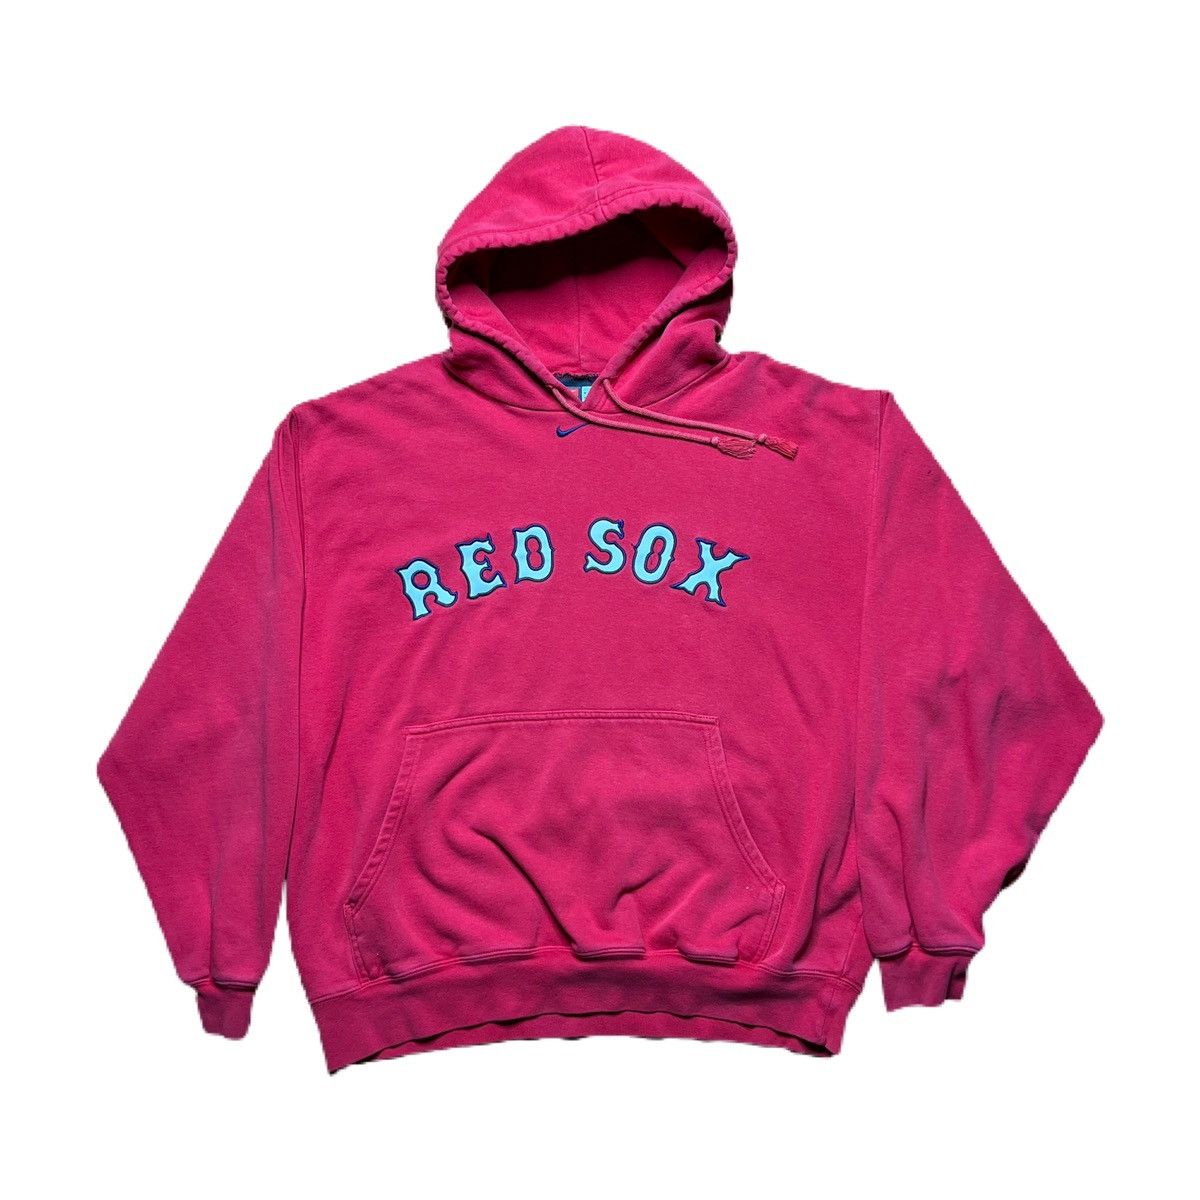 Nike Vintage Boston Red Sox Nike Center Swoosh Hoodie Size US XL / EU 56 / 4 - 1 Preview